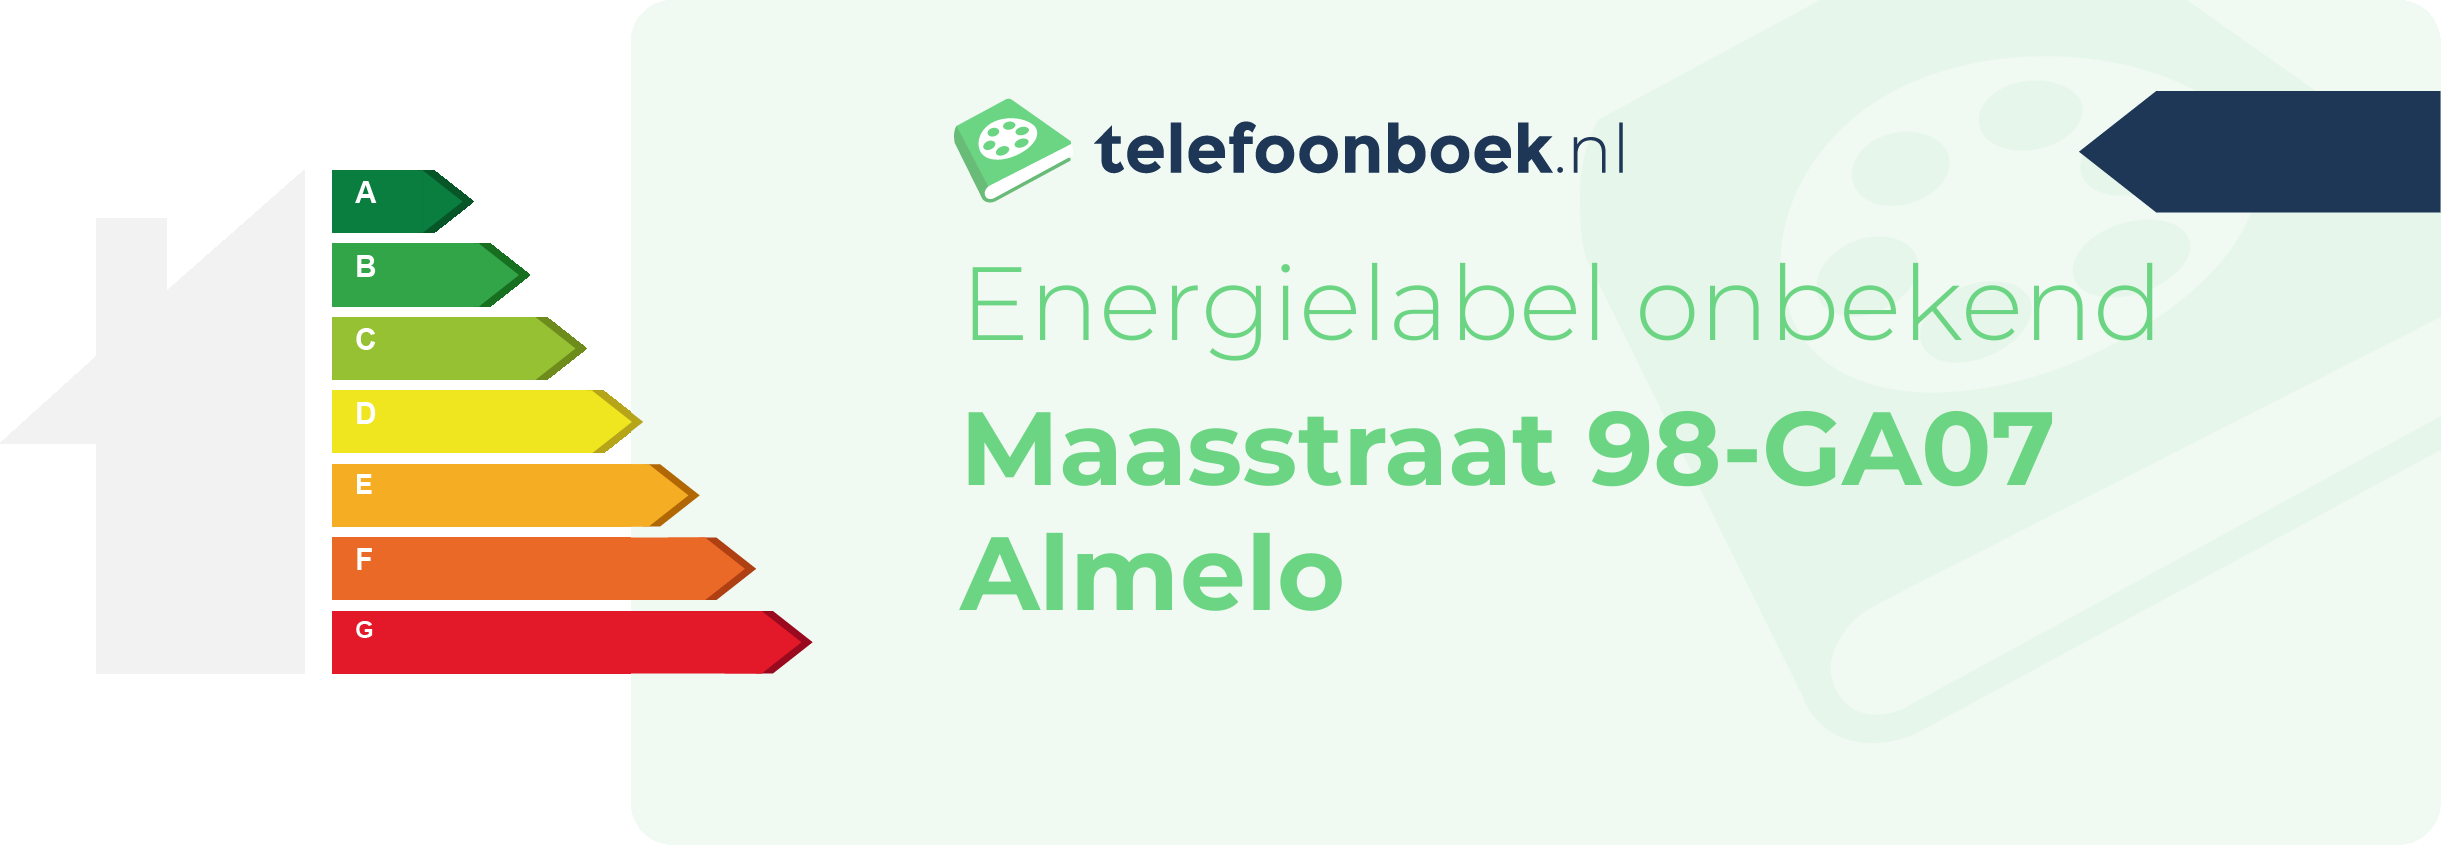 Energielabel Maasstraat 98-GA07 Almelo